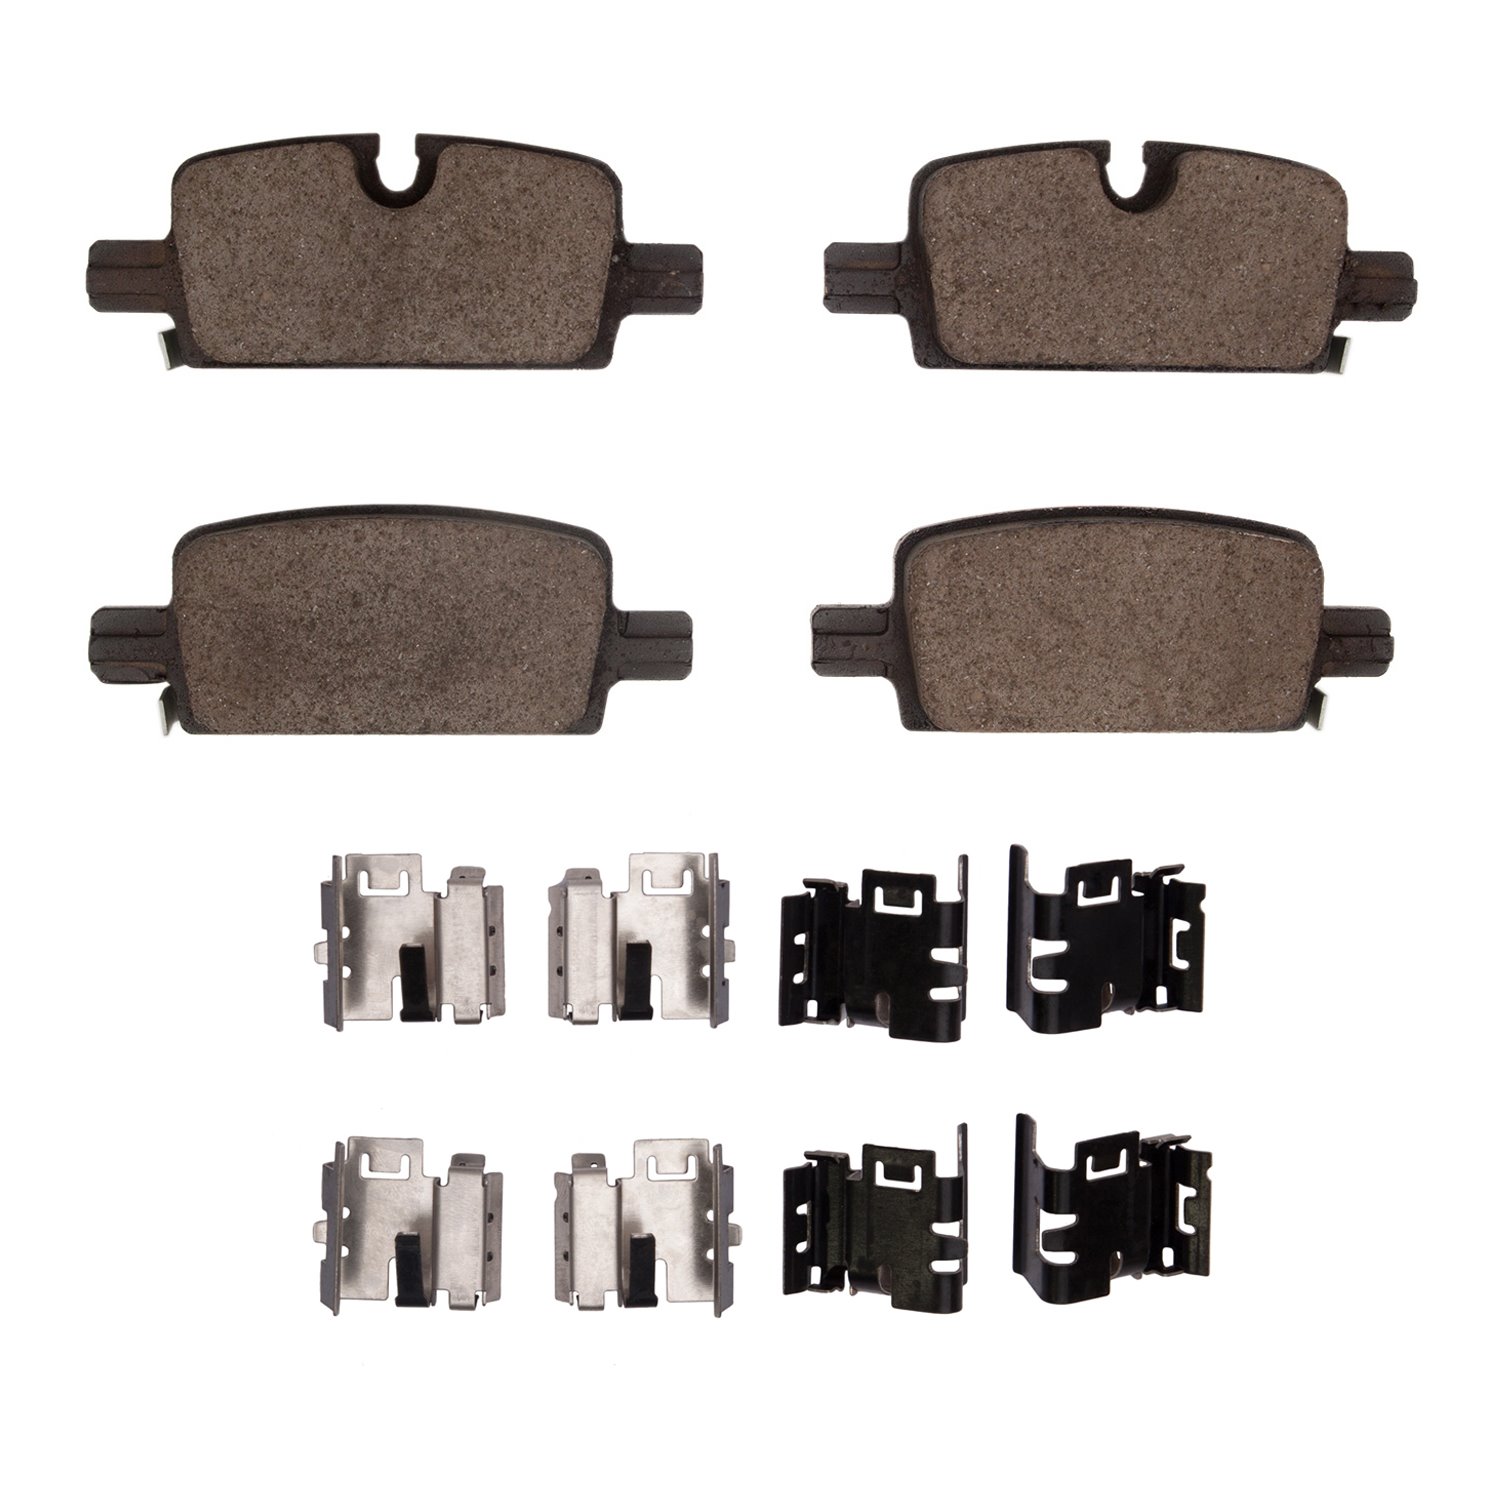 1551-2174-01 5000 Advanced Ceramic Brake Pads & Hardware Kit, Fits Select Multiple Makes/Models, Position: Rear,Rr